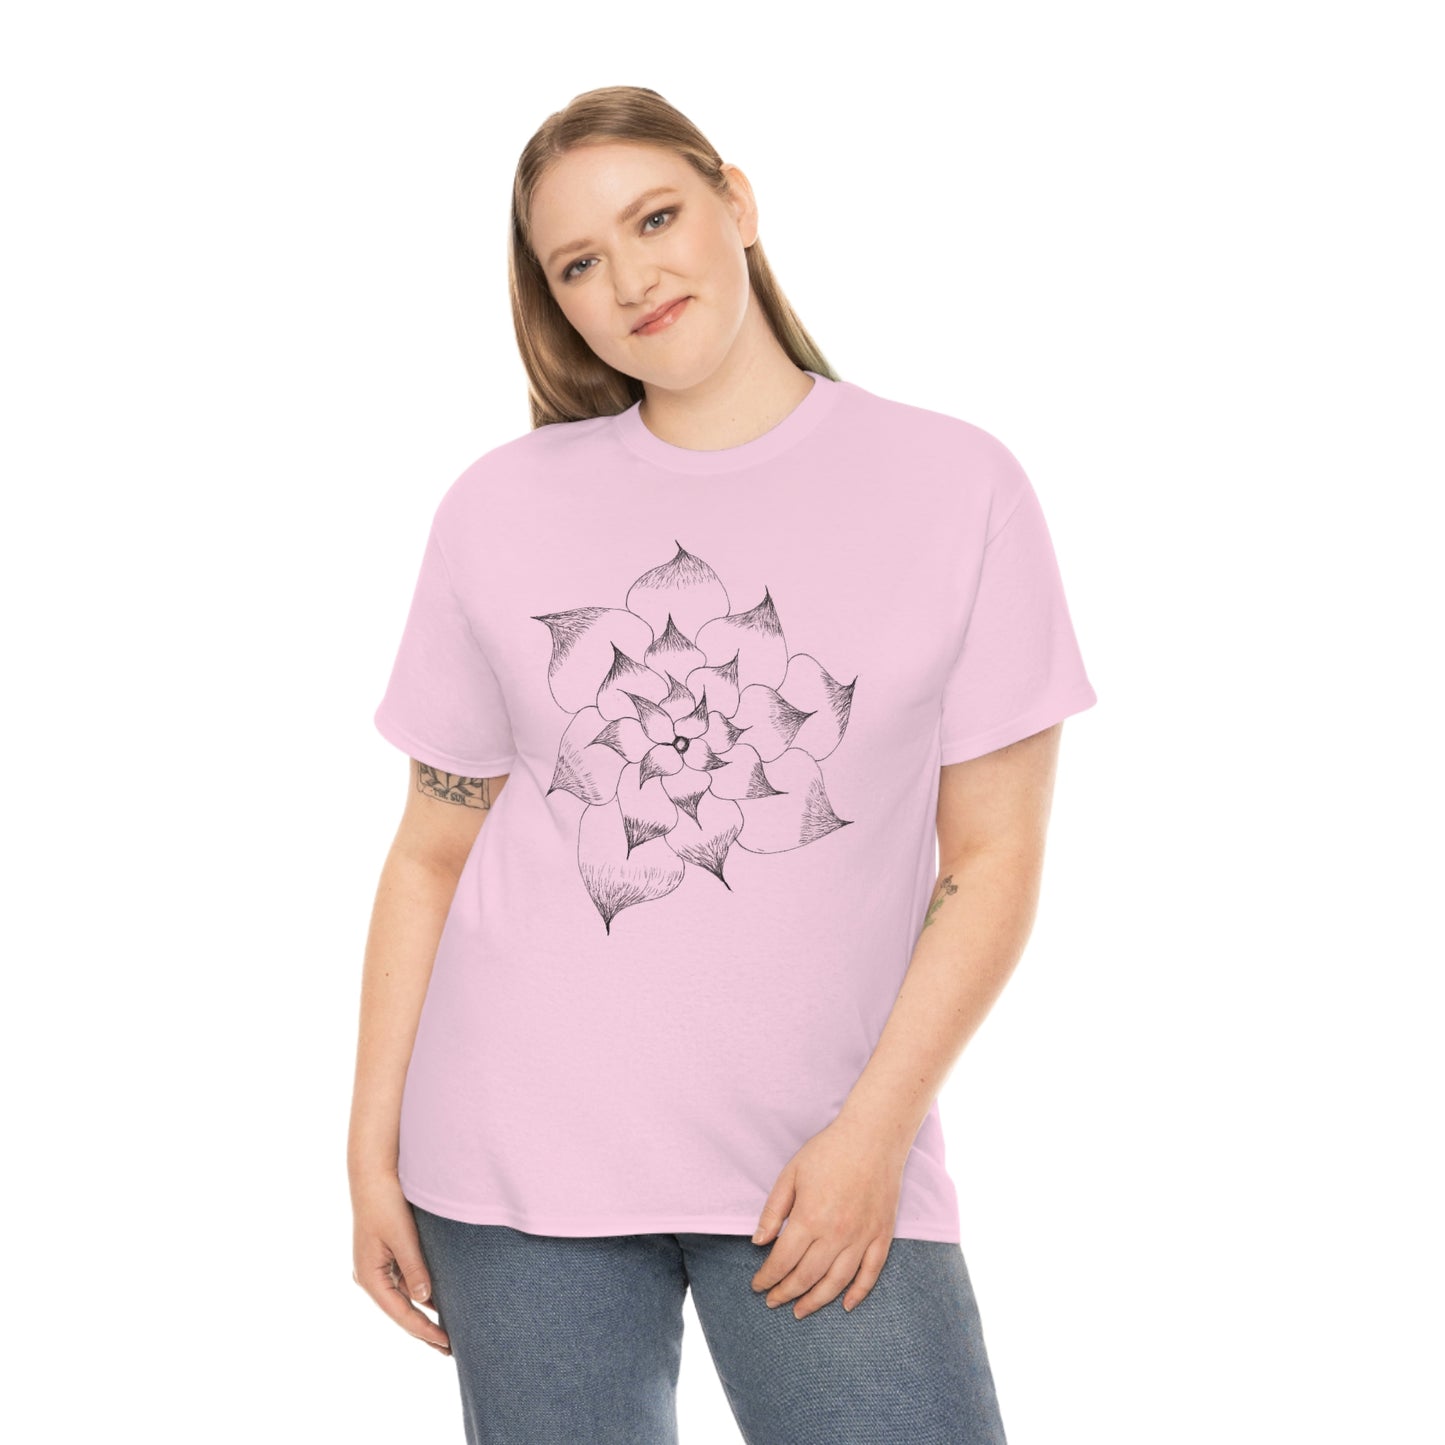 Flower Tee, custom designed tee, flower t-shirt, floral graphic tee